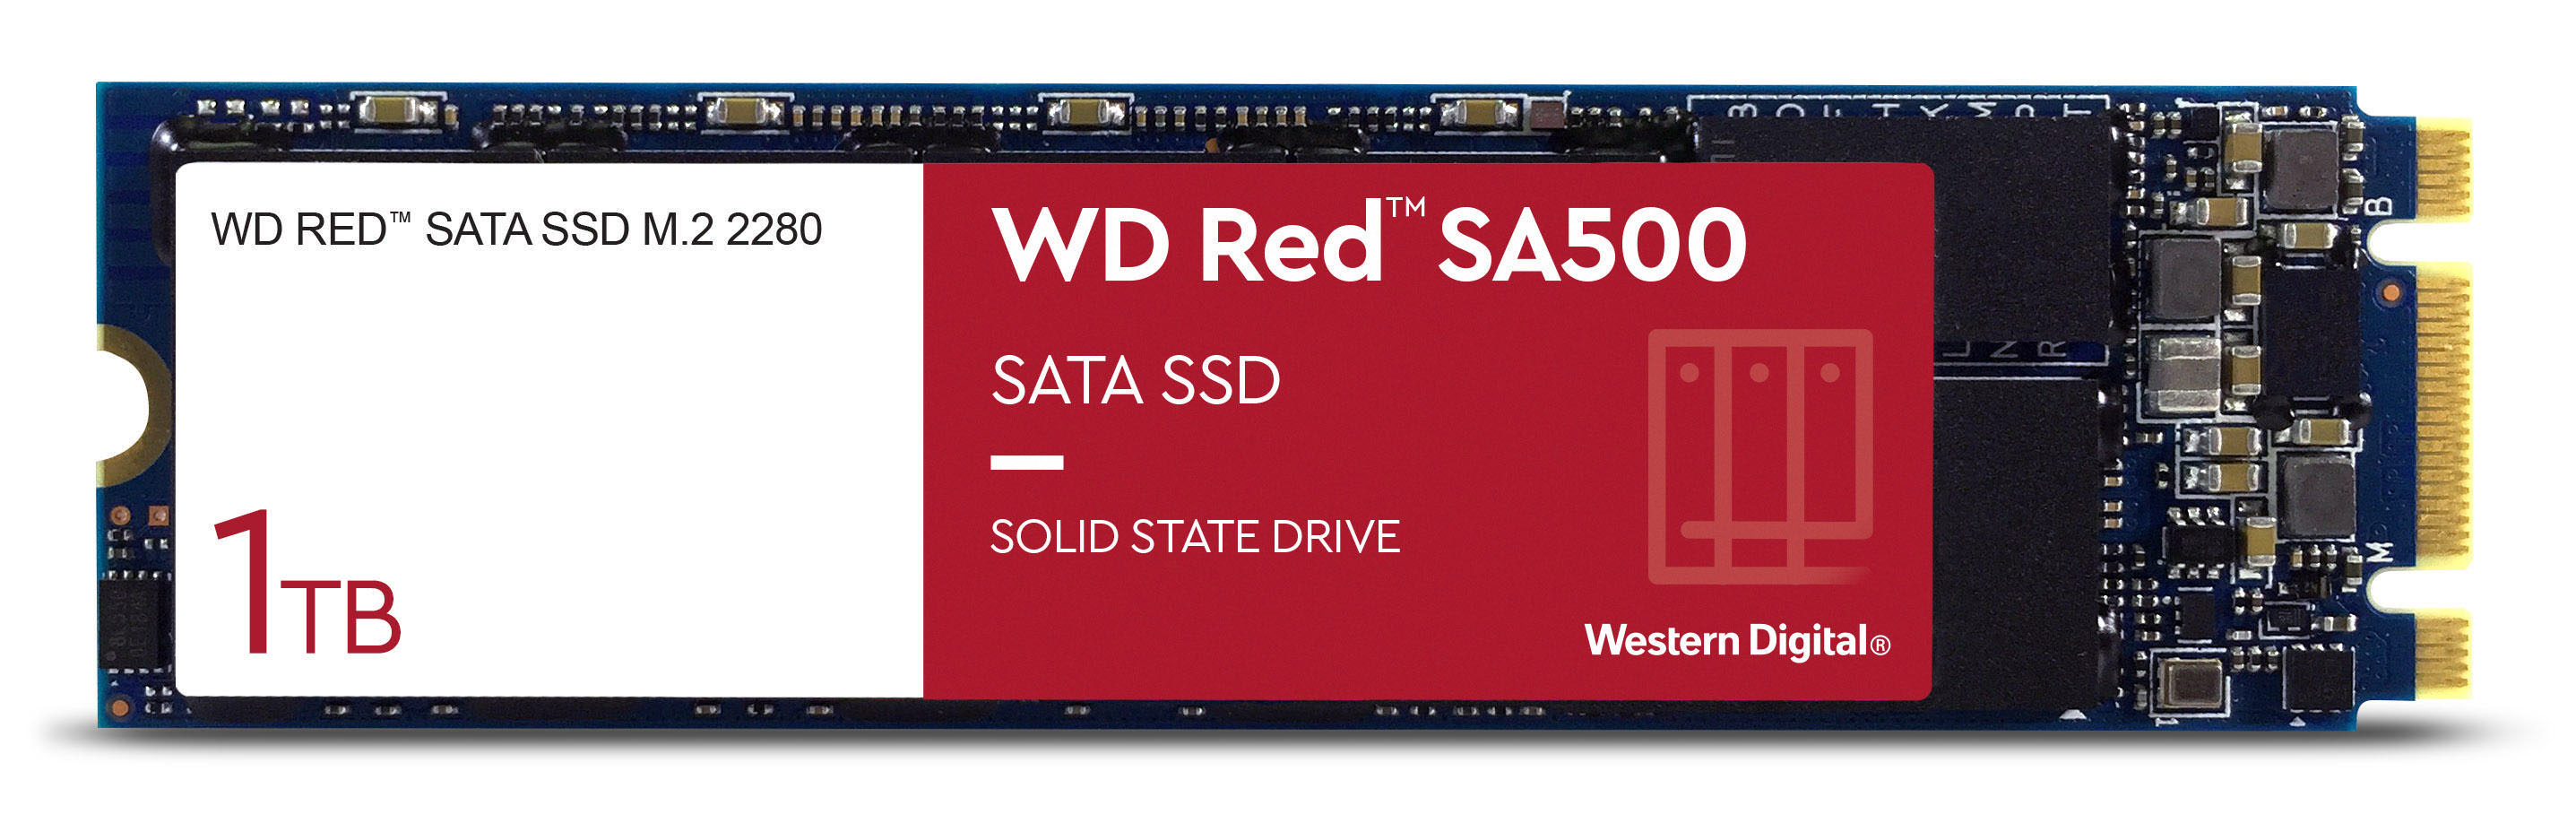 SATA, intern WD Red™ Speicher, SA500 1 SSD via M.2 TB